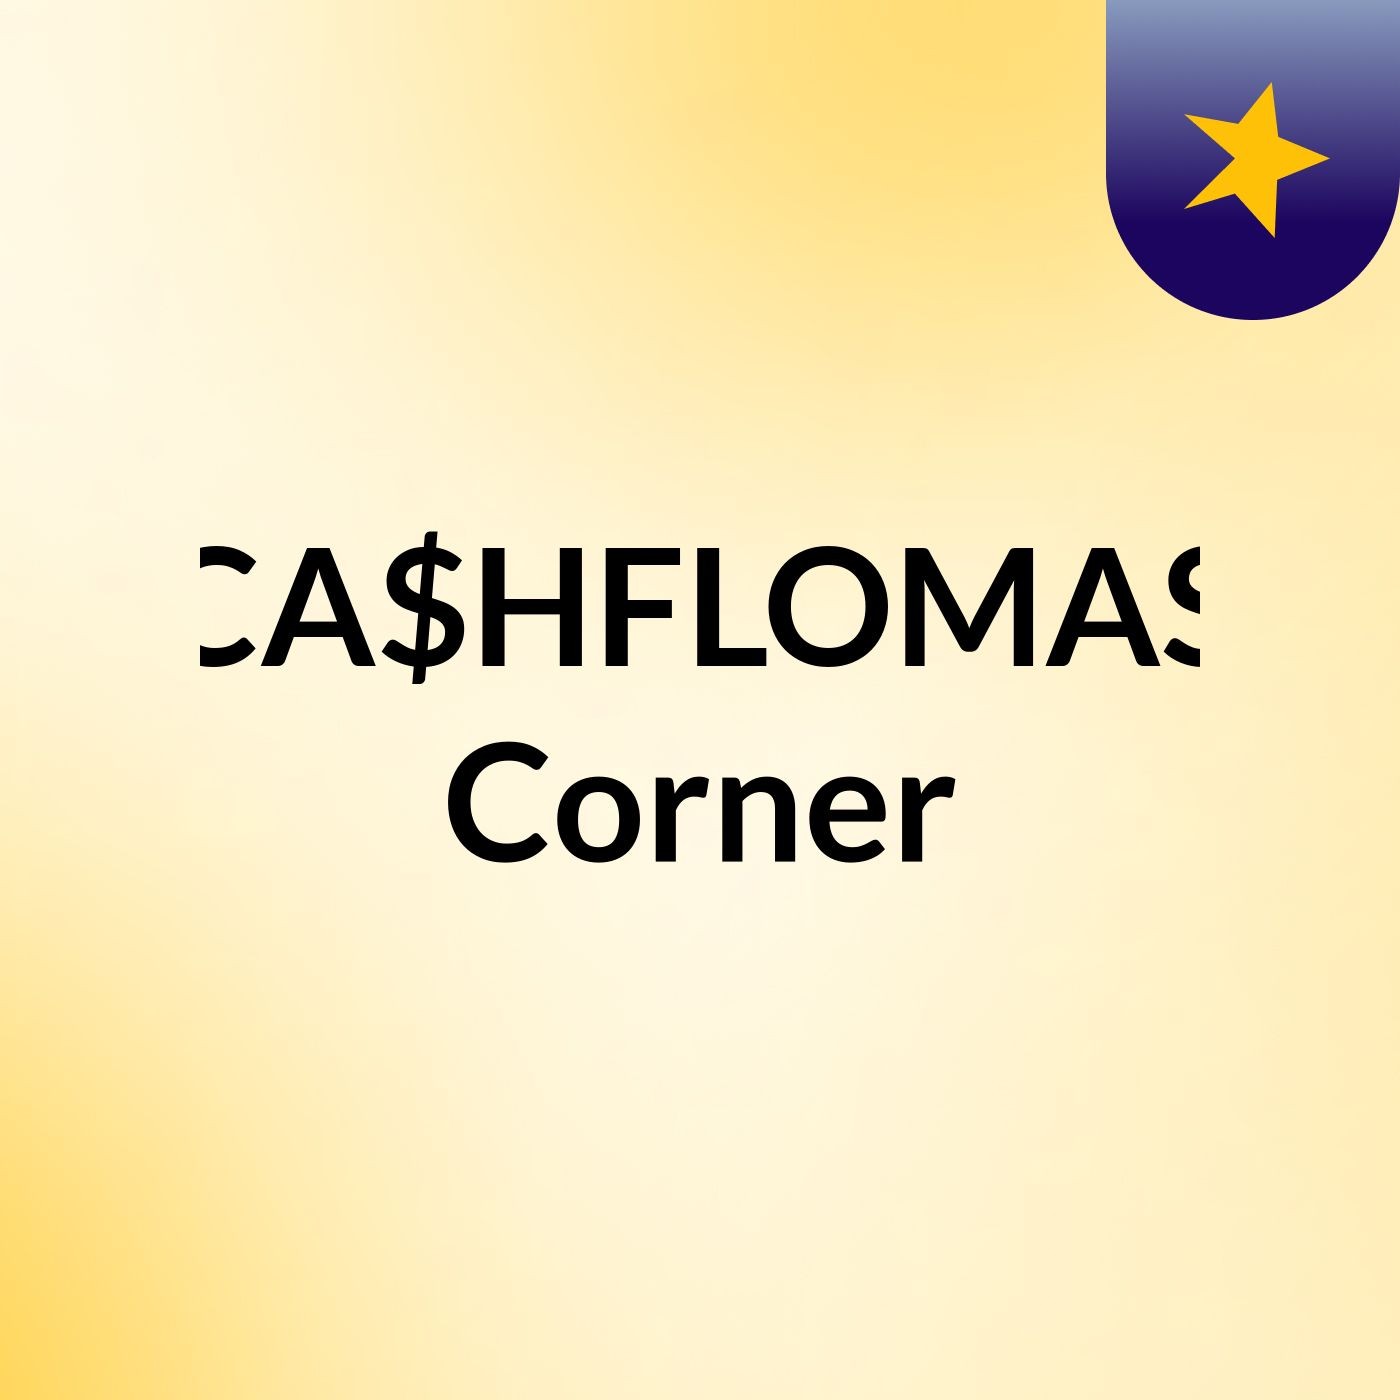 CA$HFLOMAS Corner